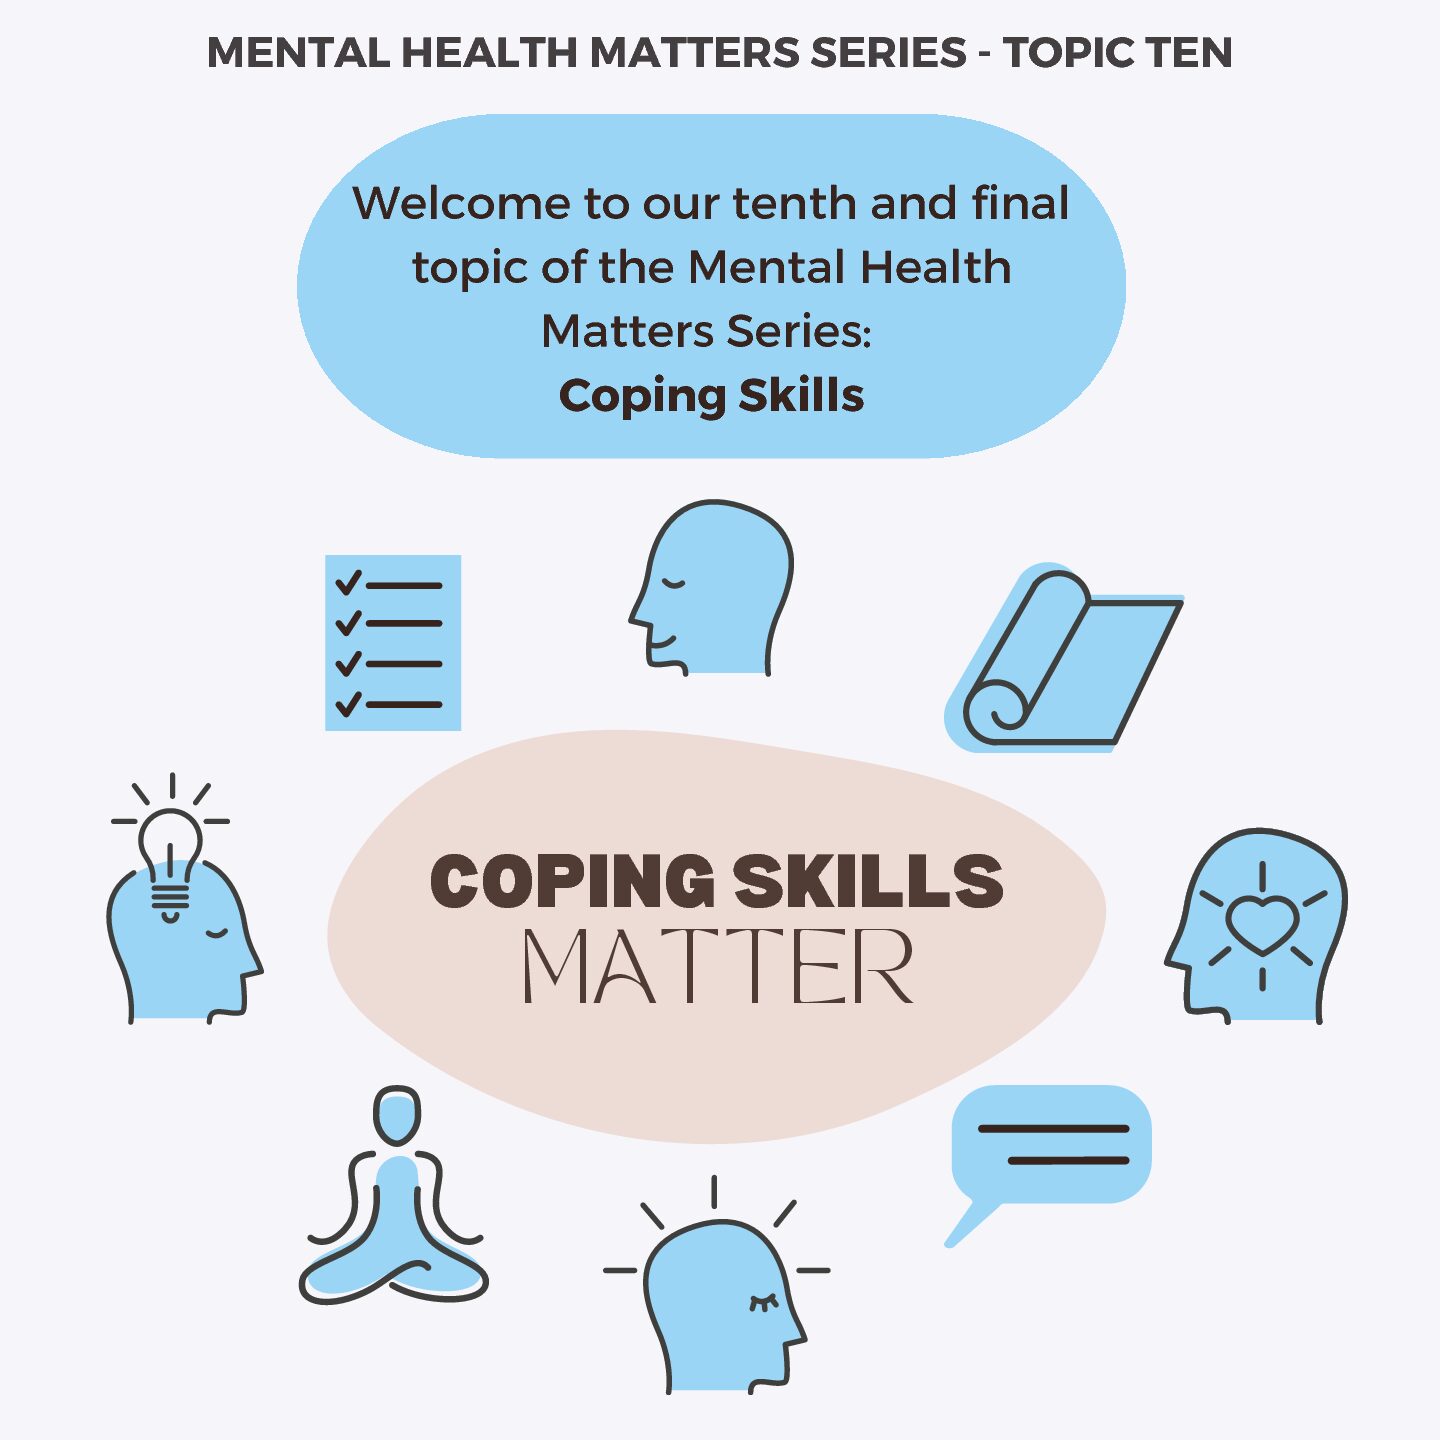 Mental Health Matters Series: Coping Skills Matter